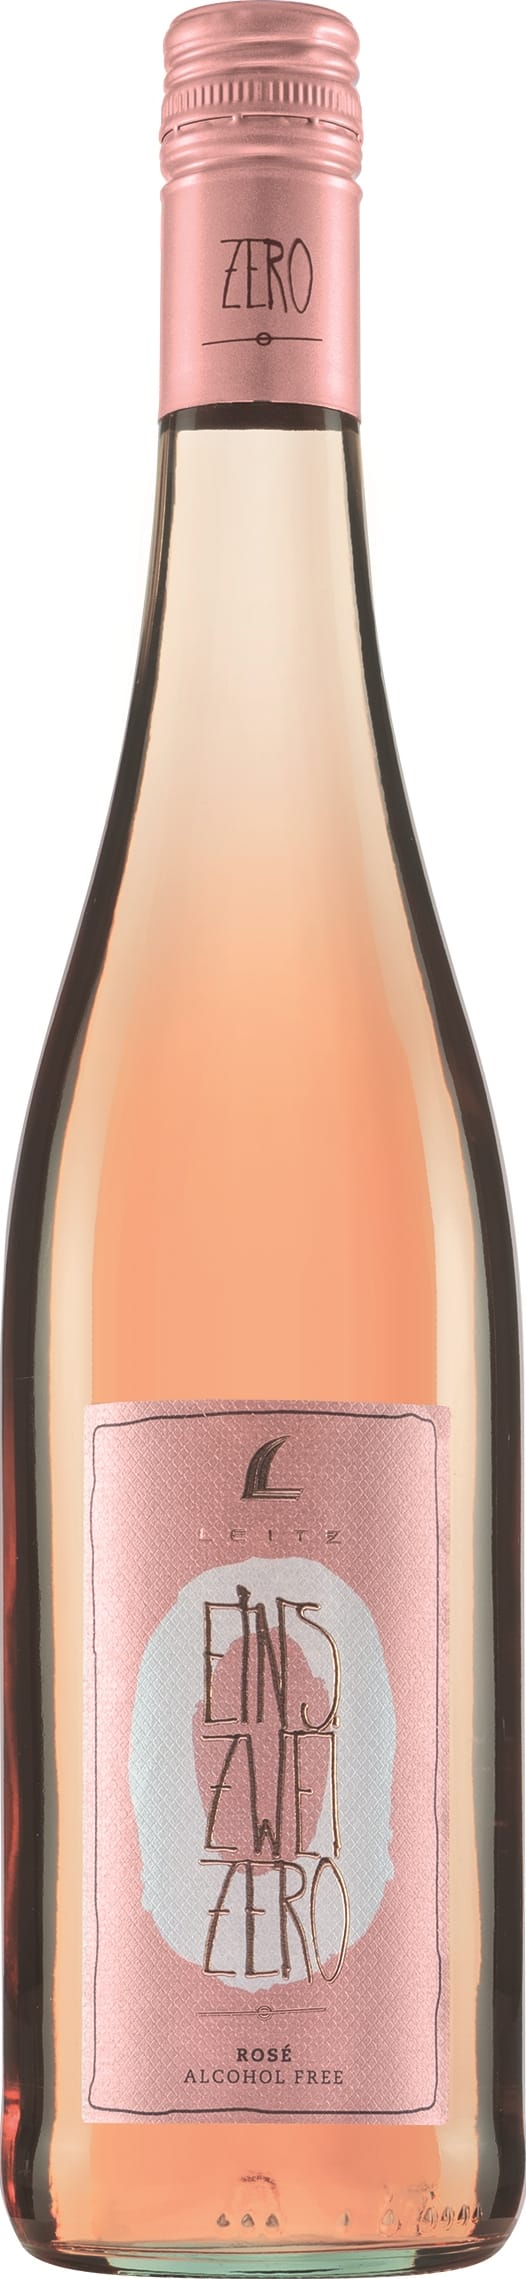 JJ Leitz Eins Zwei Zero Rose (Alcohol Free) 75cl NV - Buy JJ Leitz Wines from GREAT WINES DIRECT wine shop